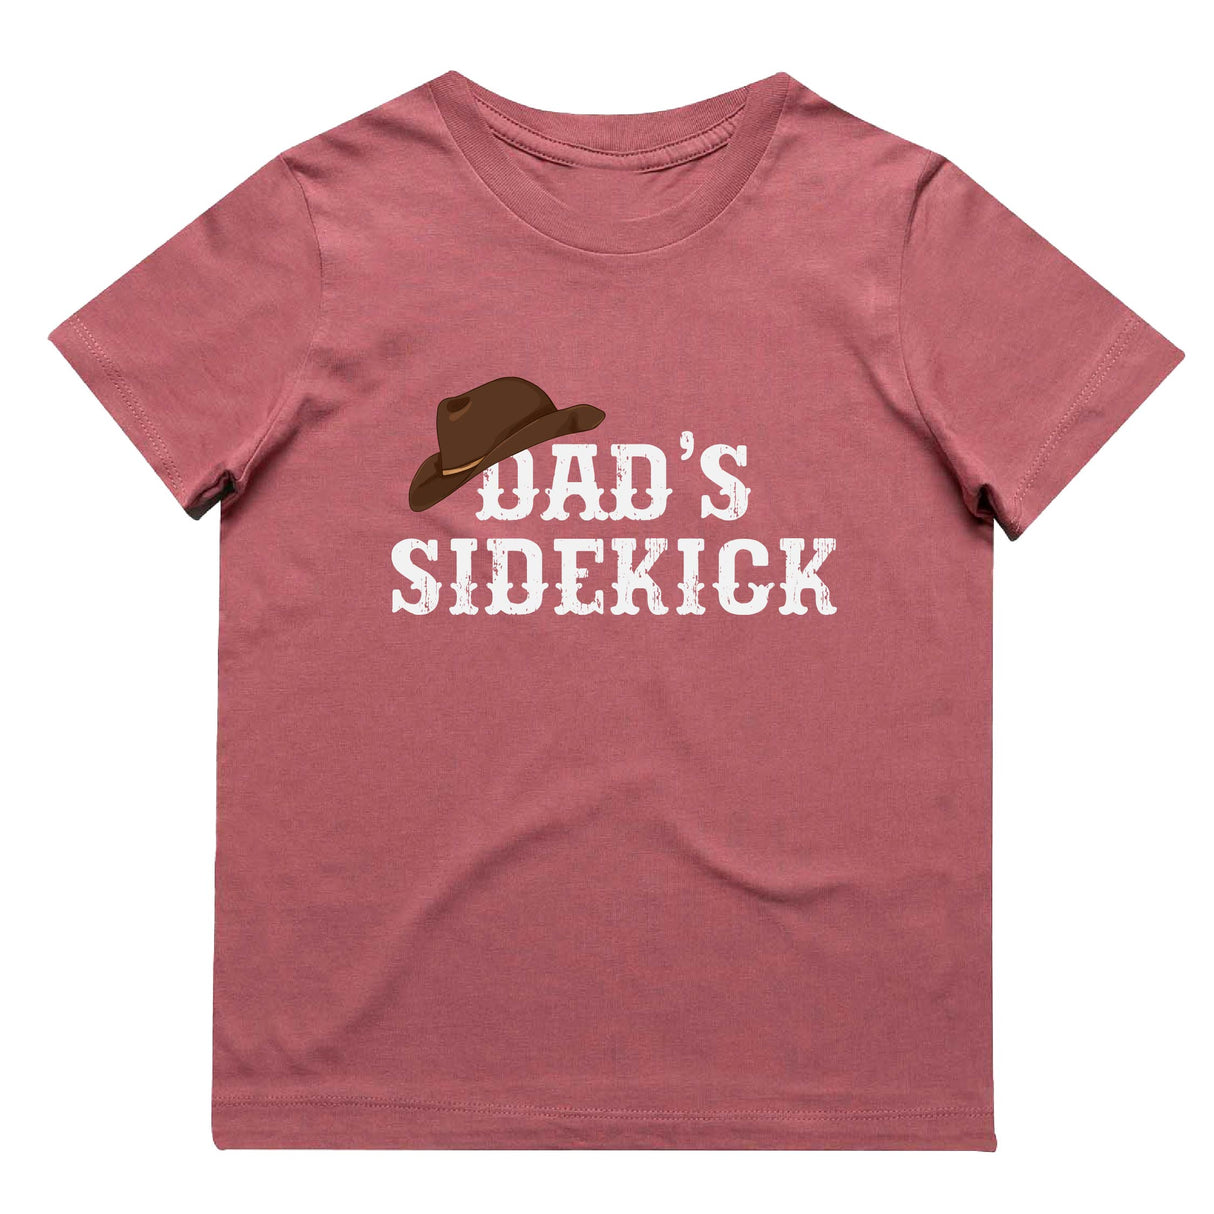 Dad's Sidekick T-Shirt | 9 Colours